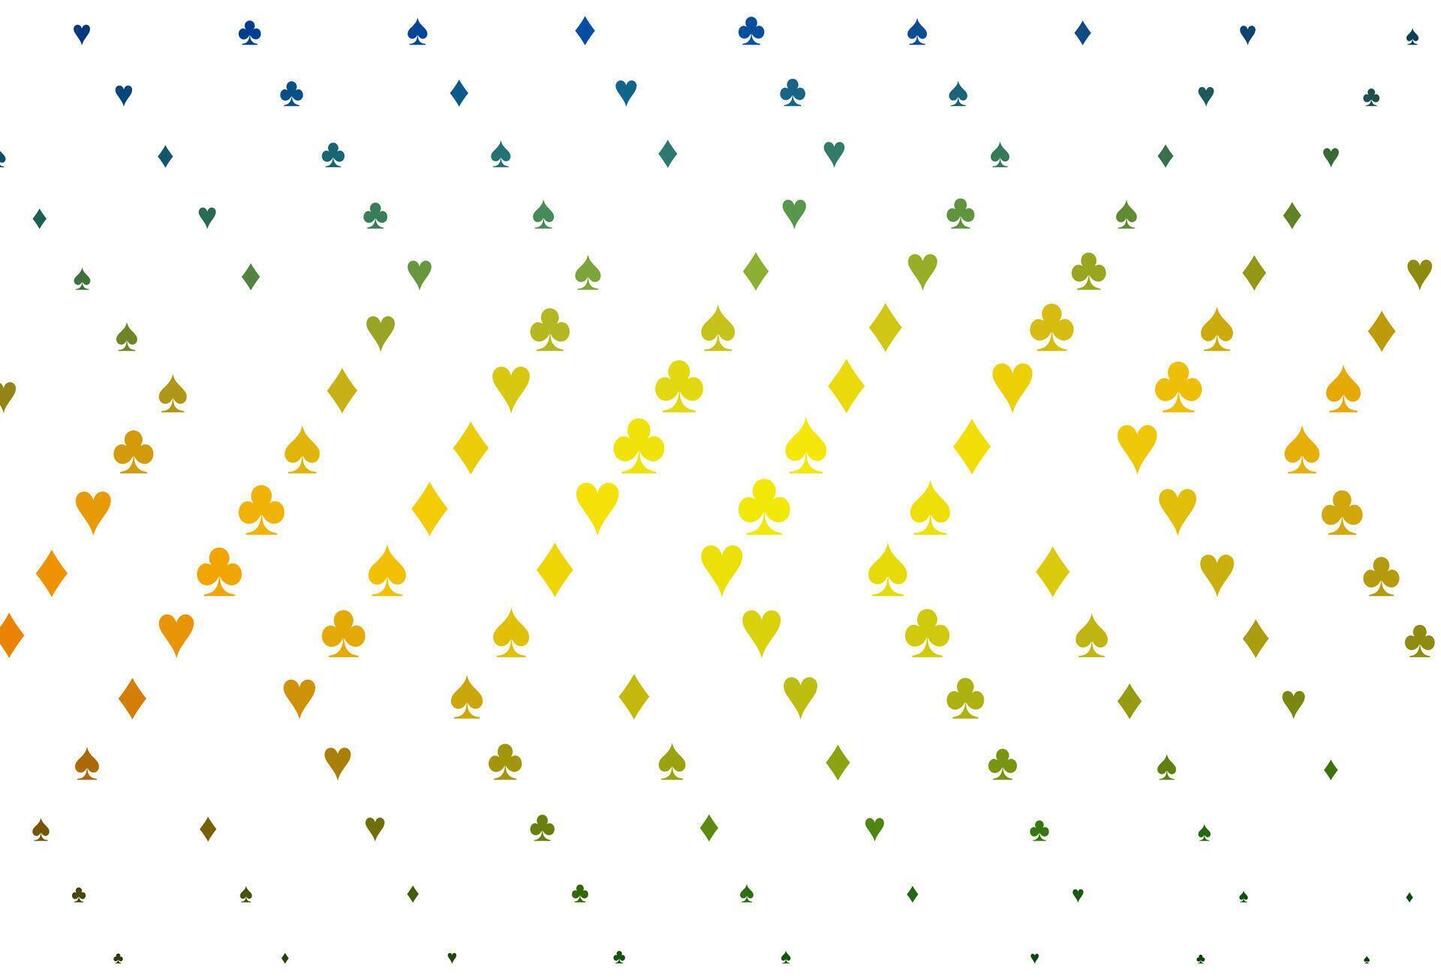 ljus blå, gul layout med element av kort. vektor